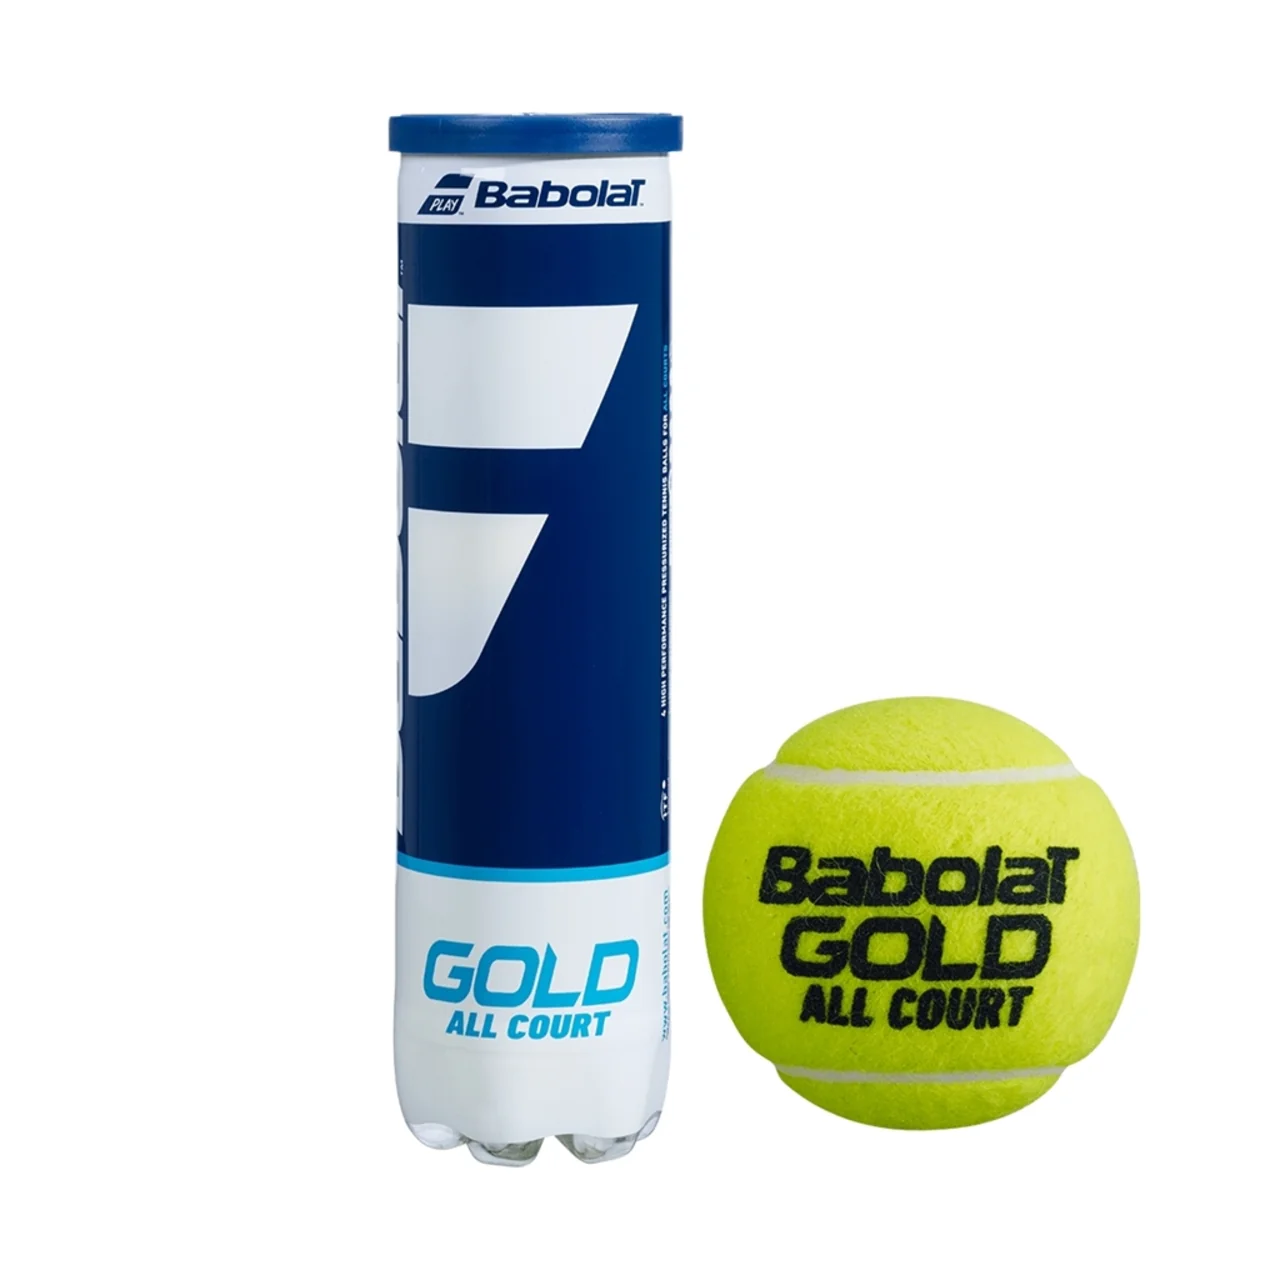 Babolat Gold 18 rør (kasse)